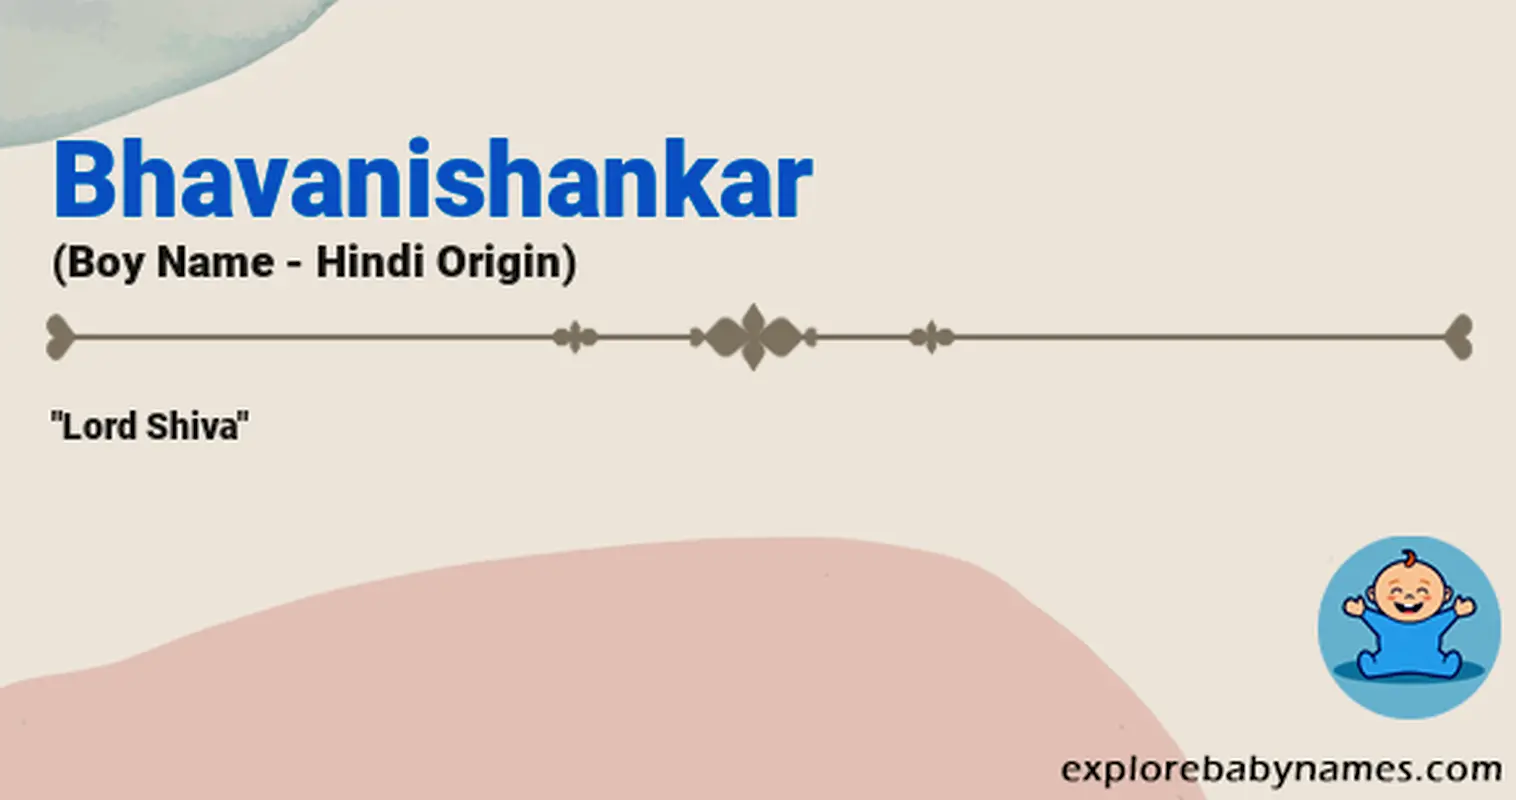 Meaning of Bhavanishankar